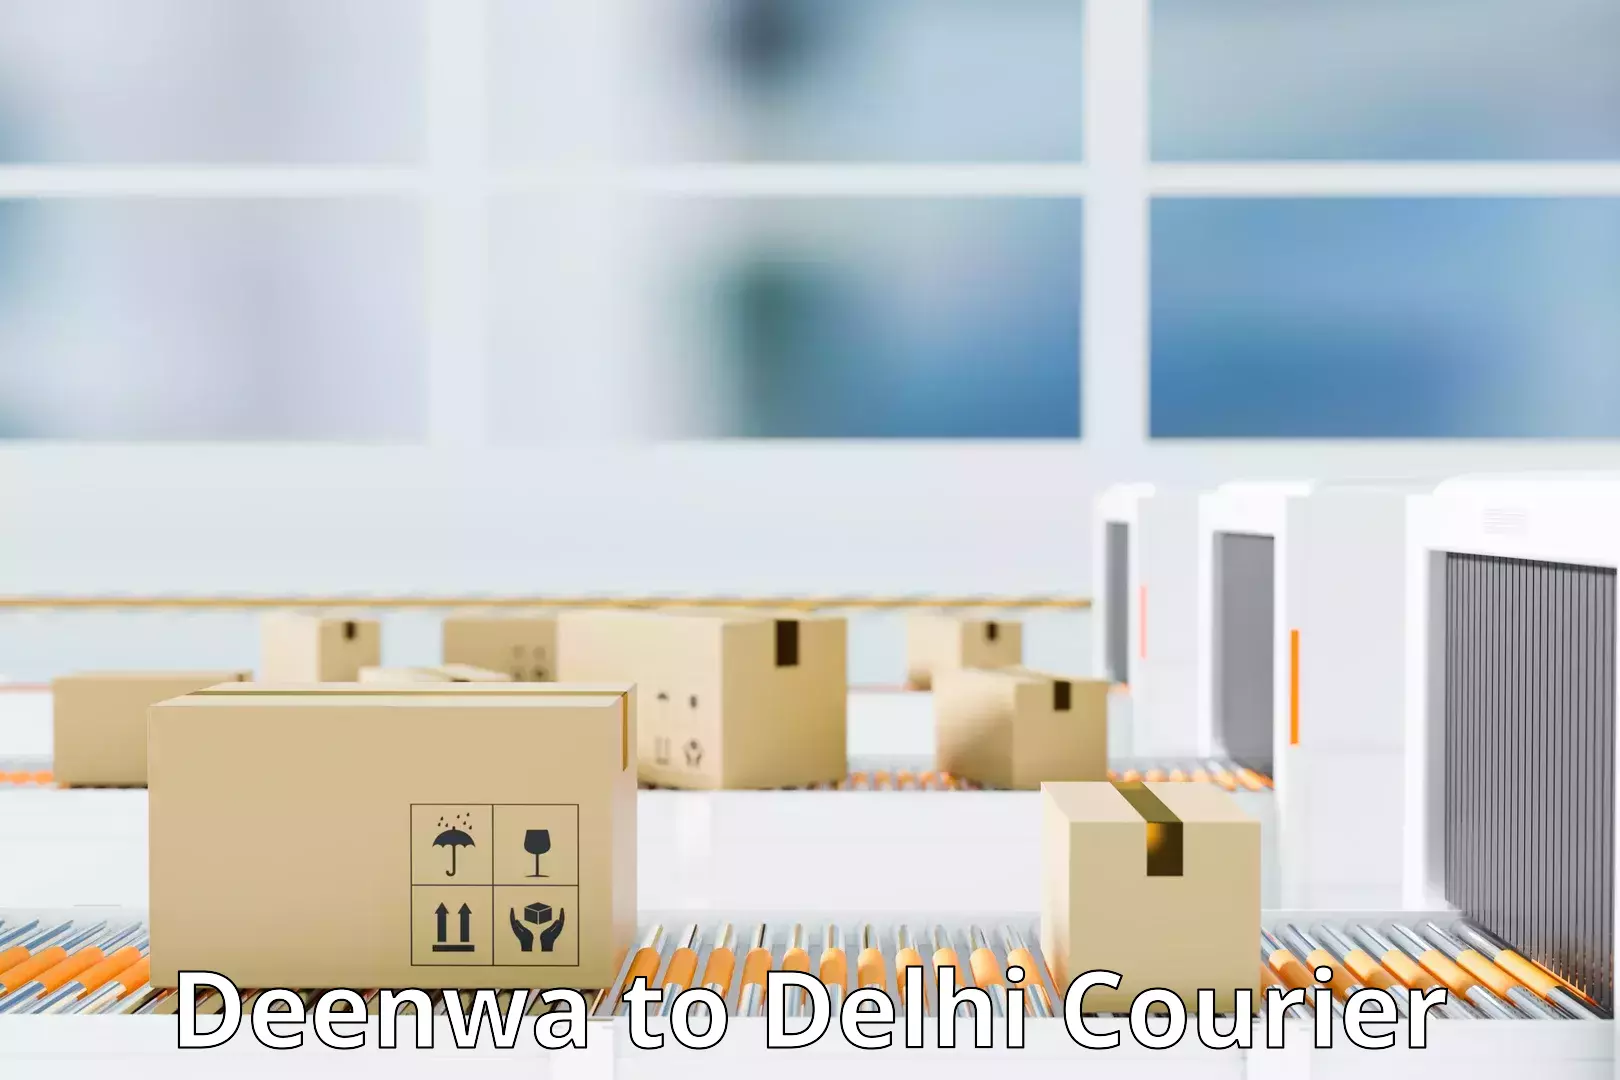 Enhanced tracking features Deenwa to Delhi